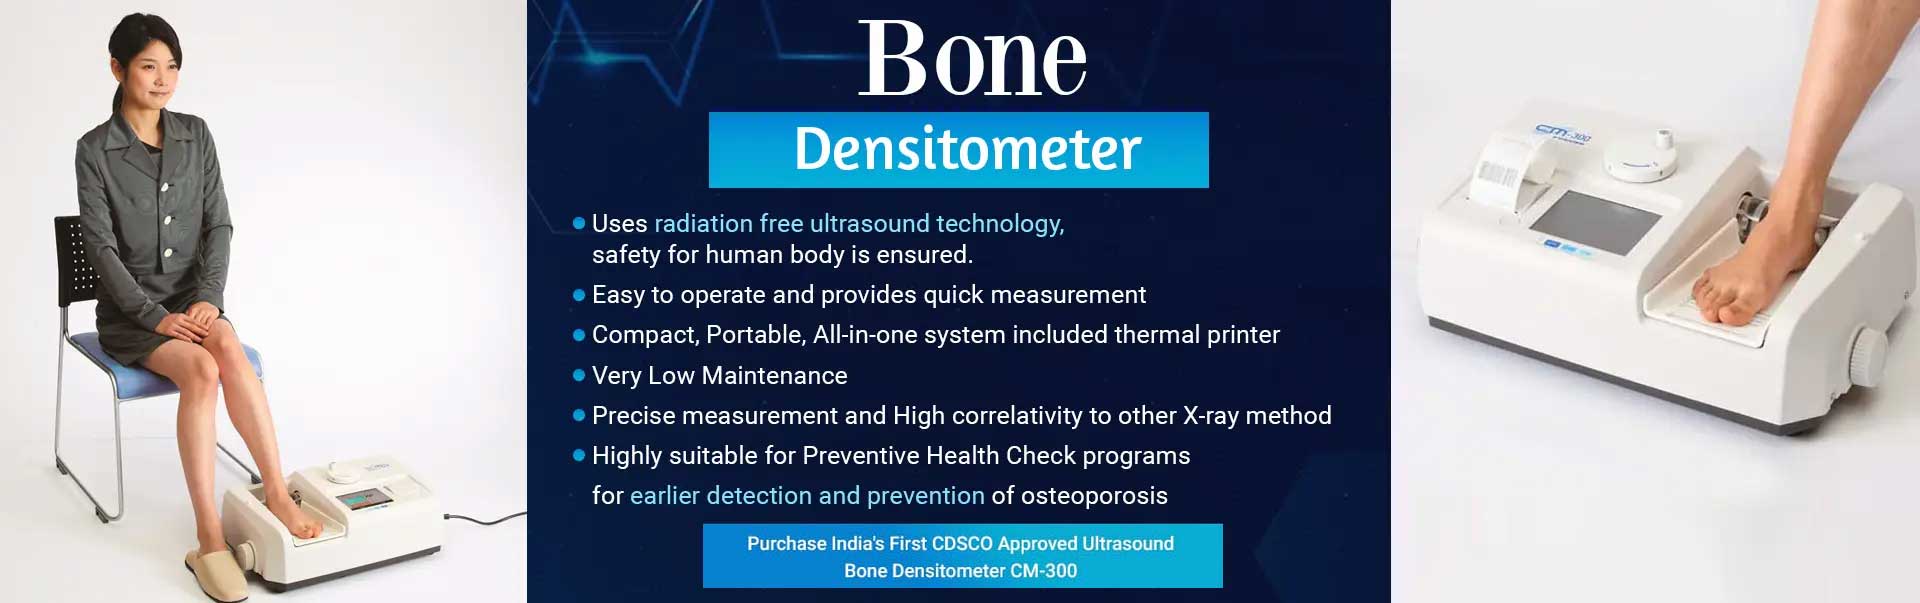 Bone Densitometer Manufacturers in Allahabad